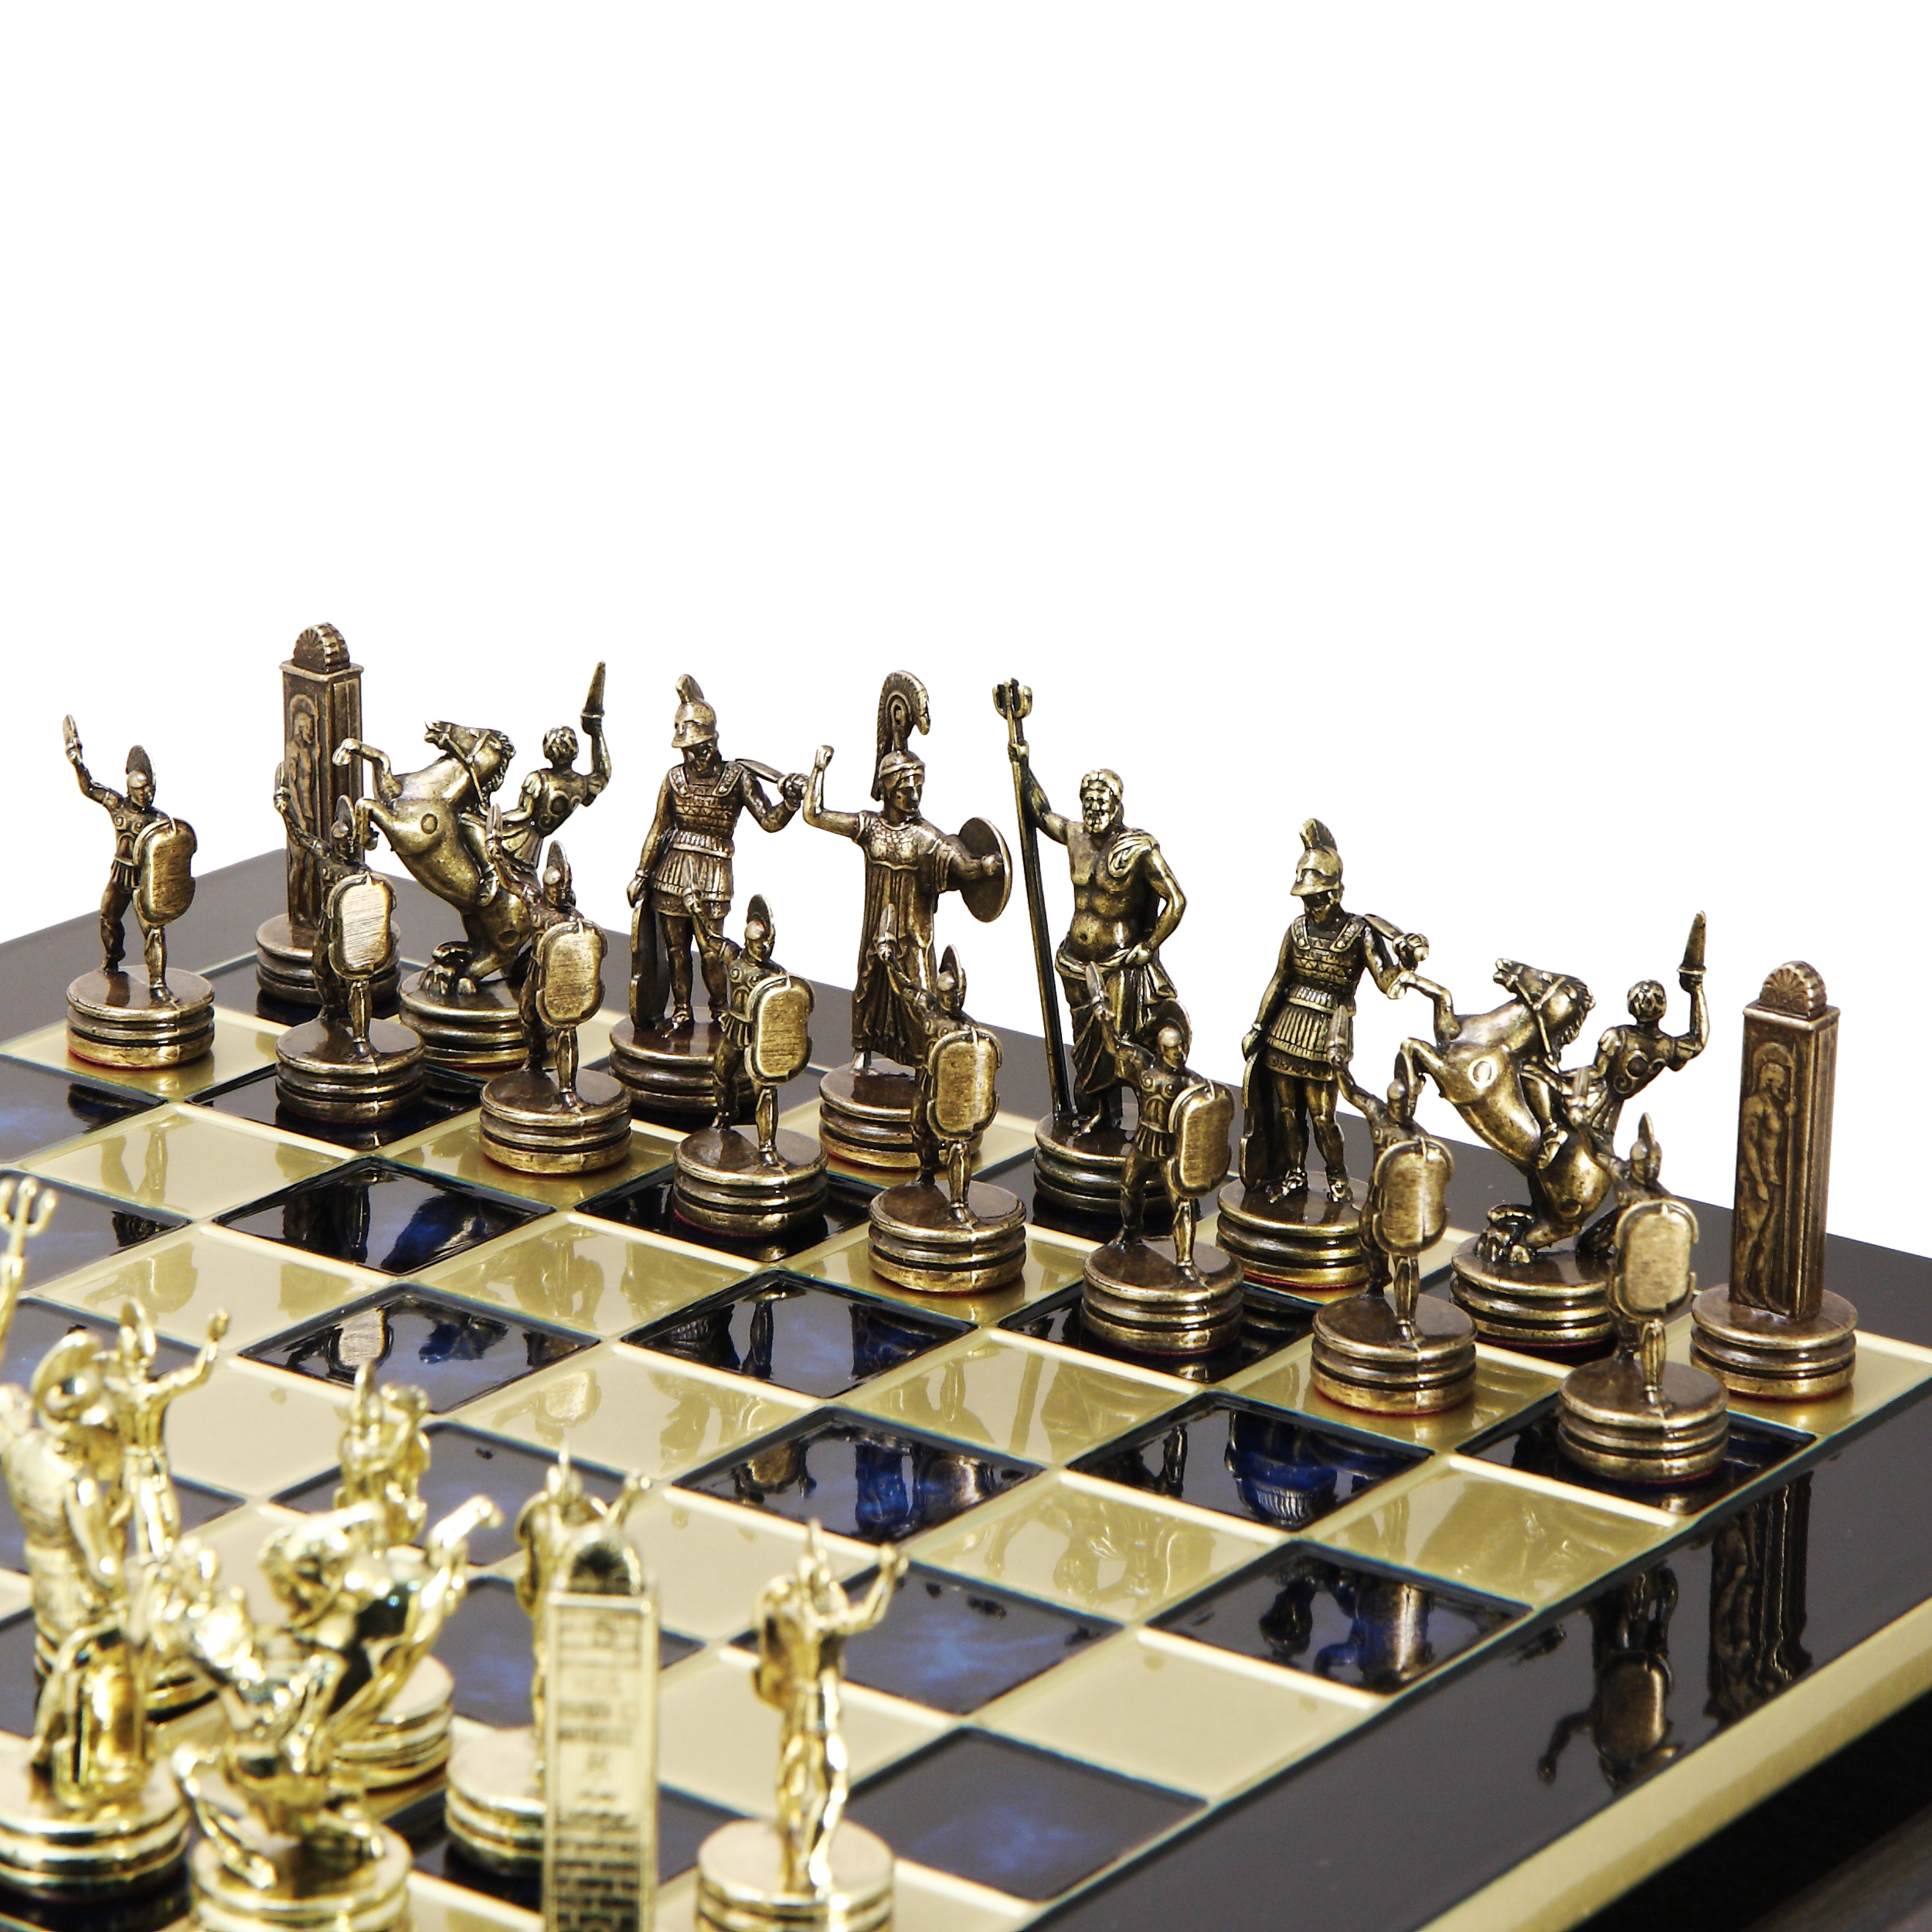 Шахматный набор Троянская война